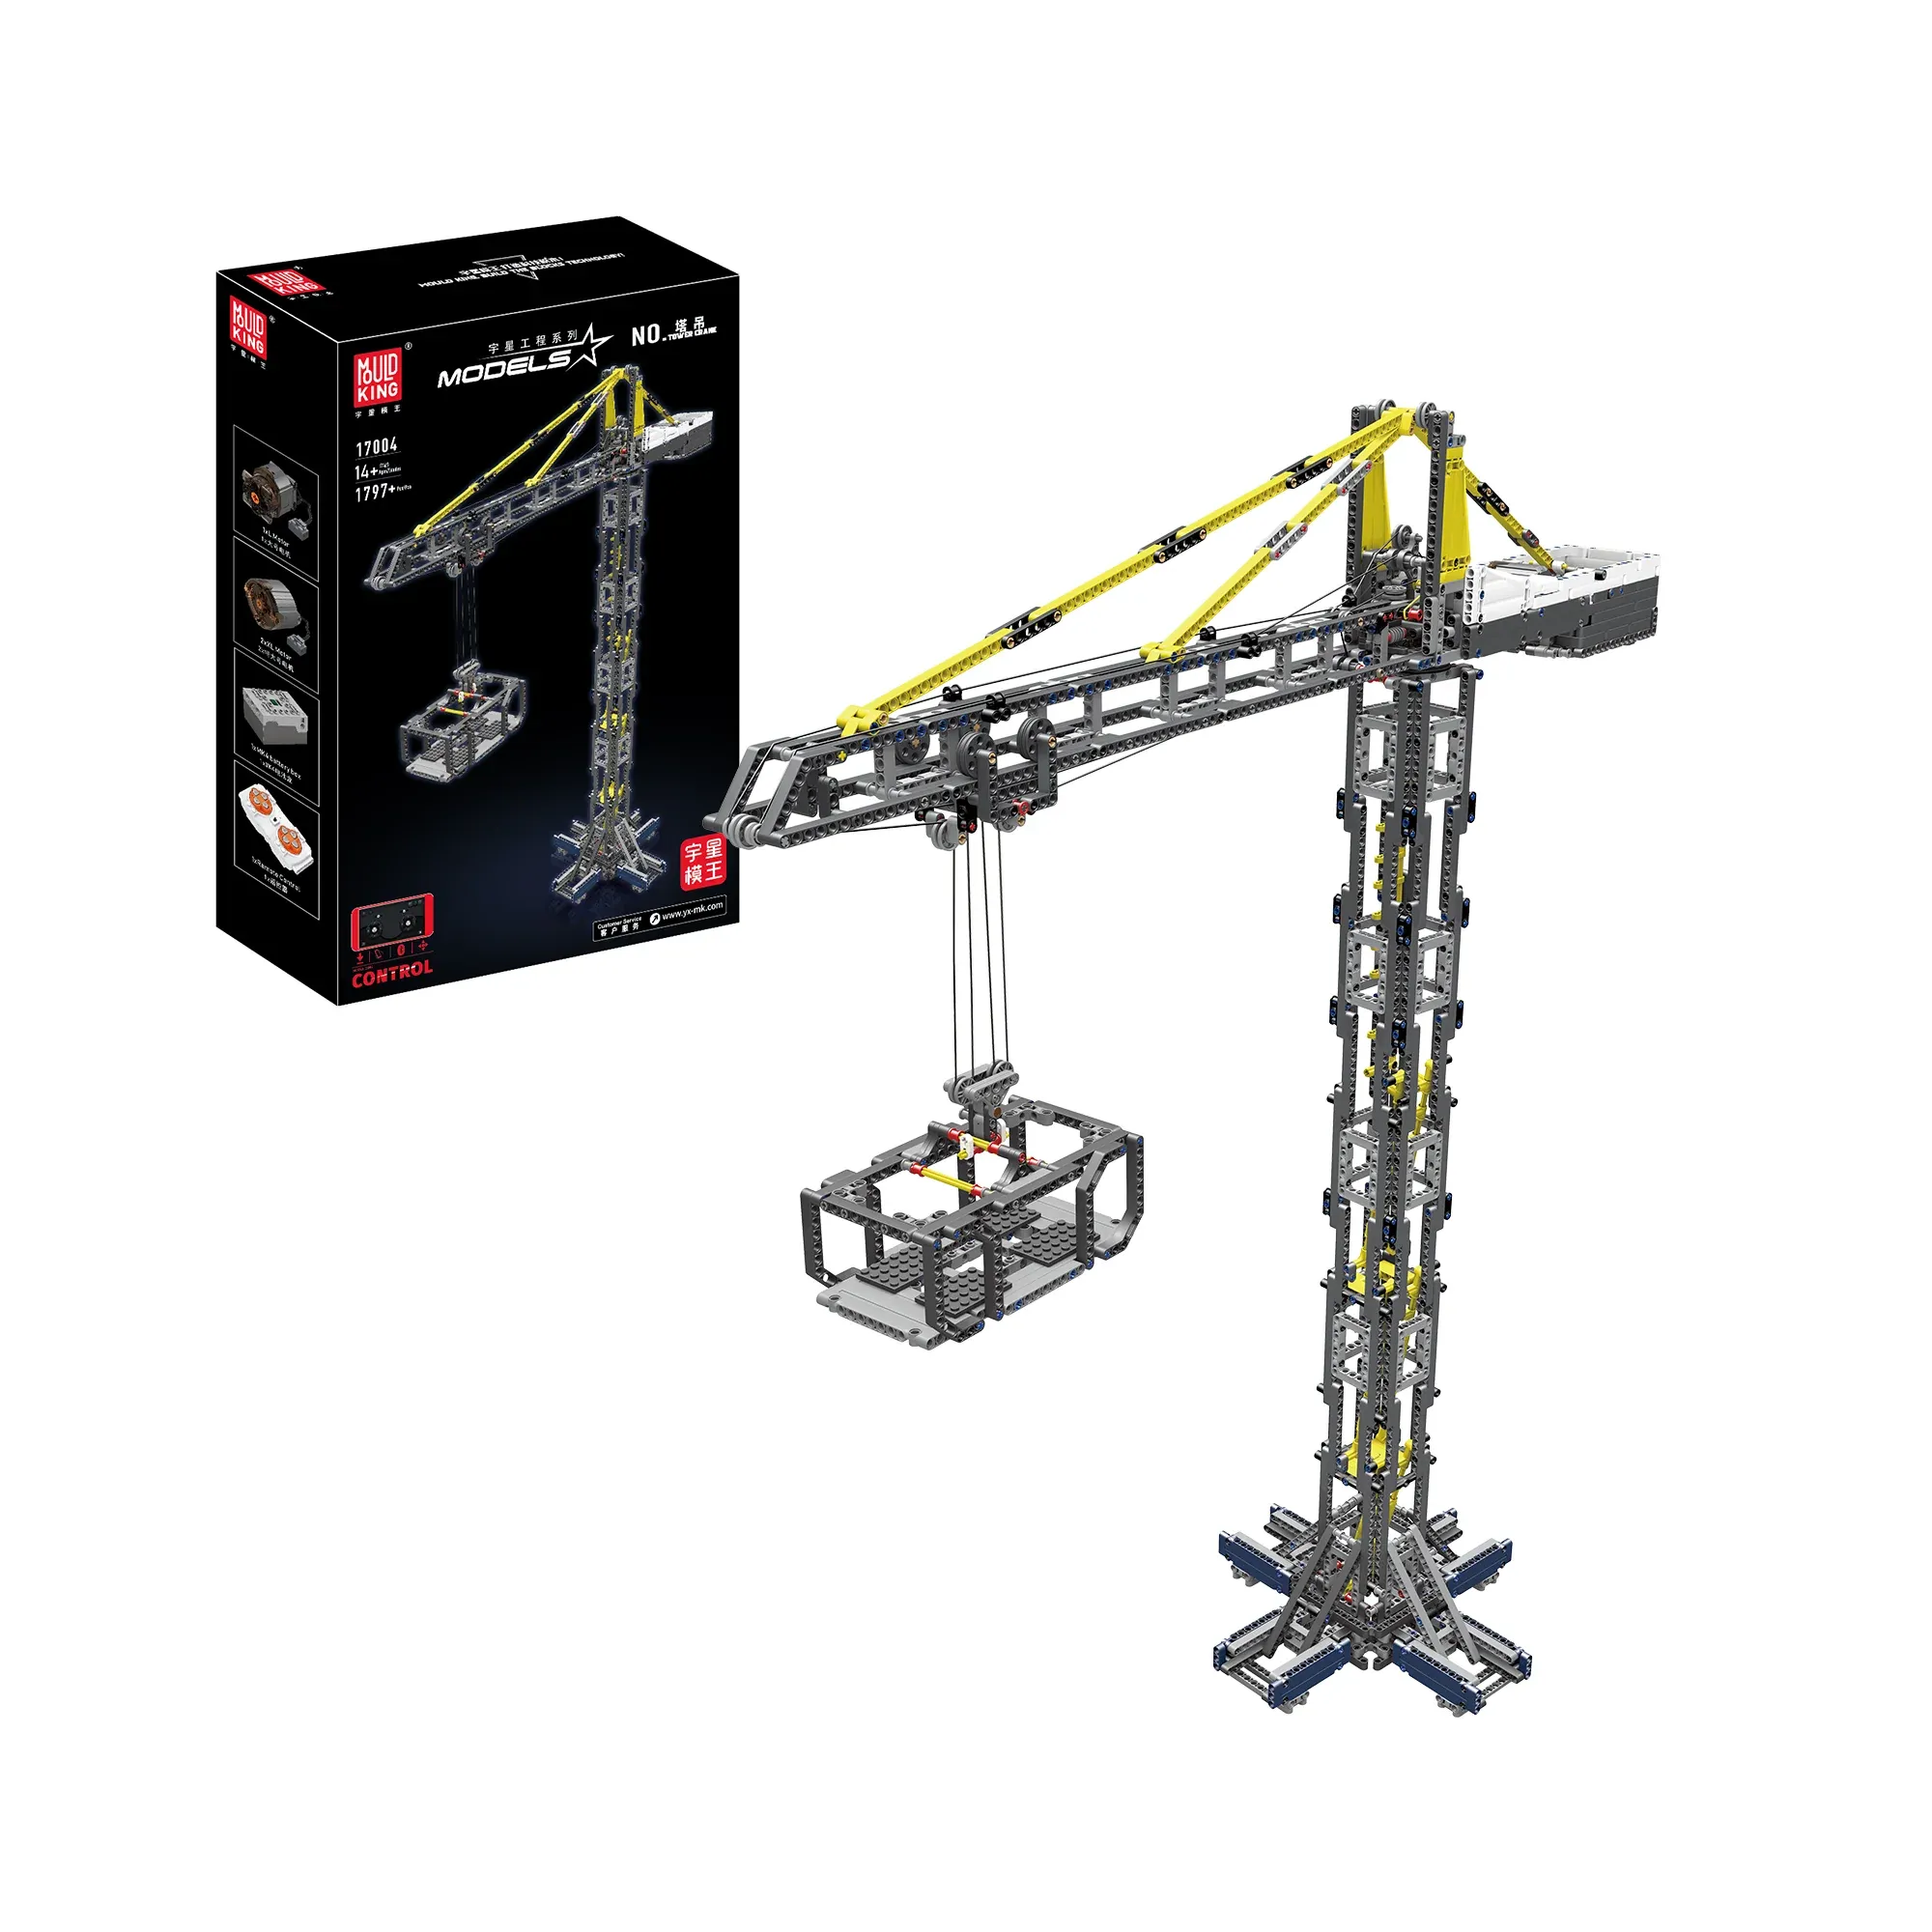 Mould King - Tower Crane | Set 17004